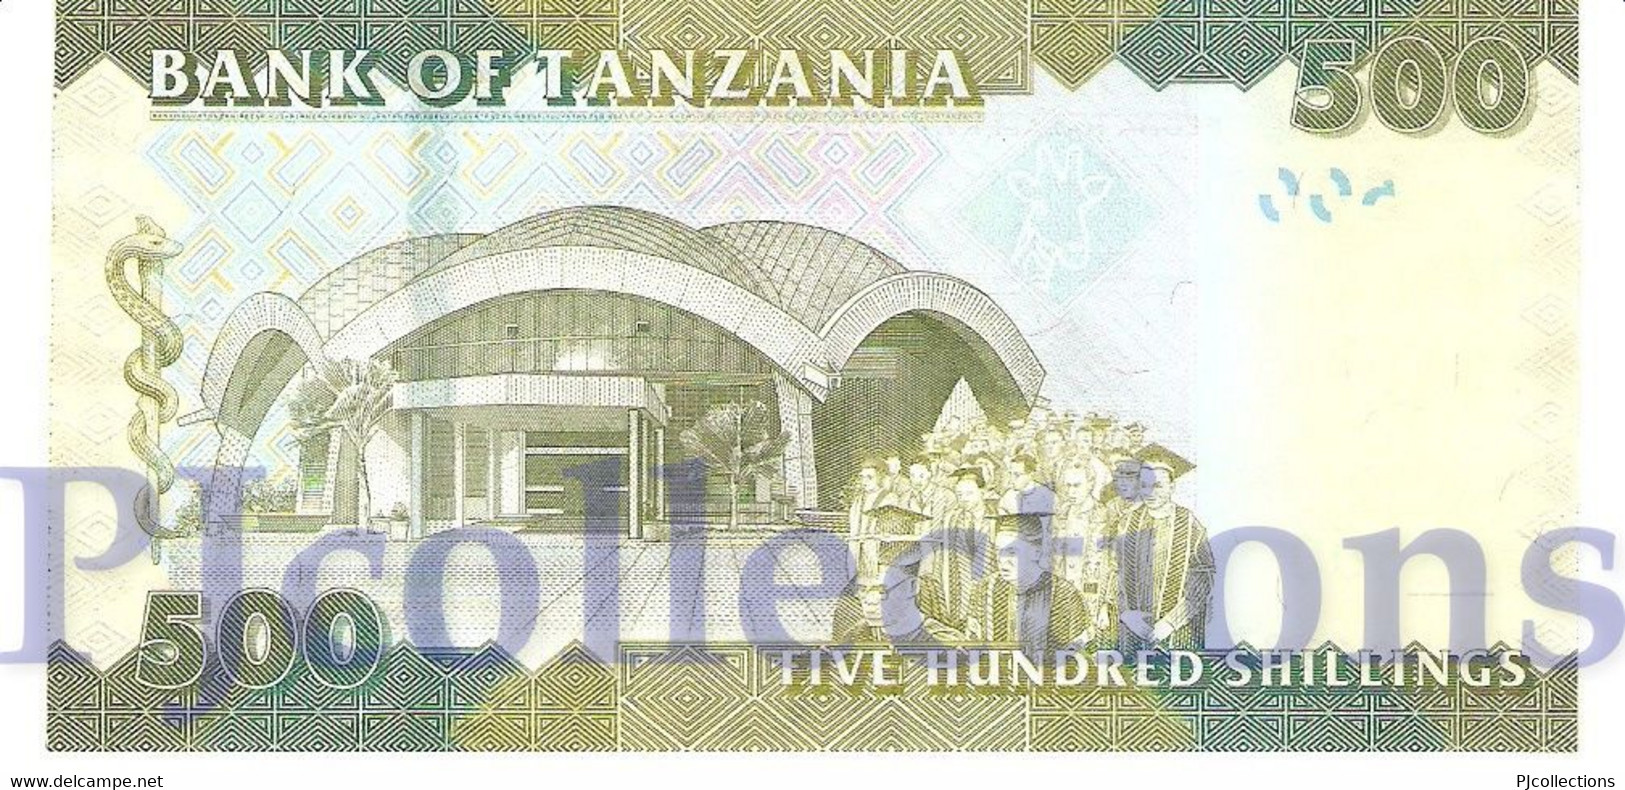 TANZANIA 500 SHILINGI 2010 PICK 40 UNC - Tanzanie